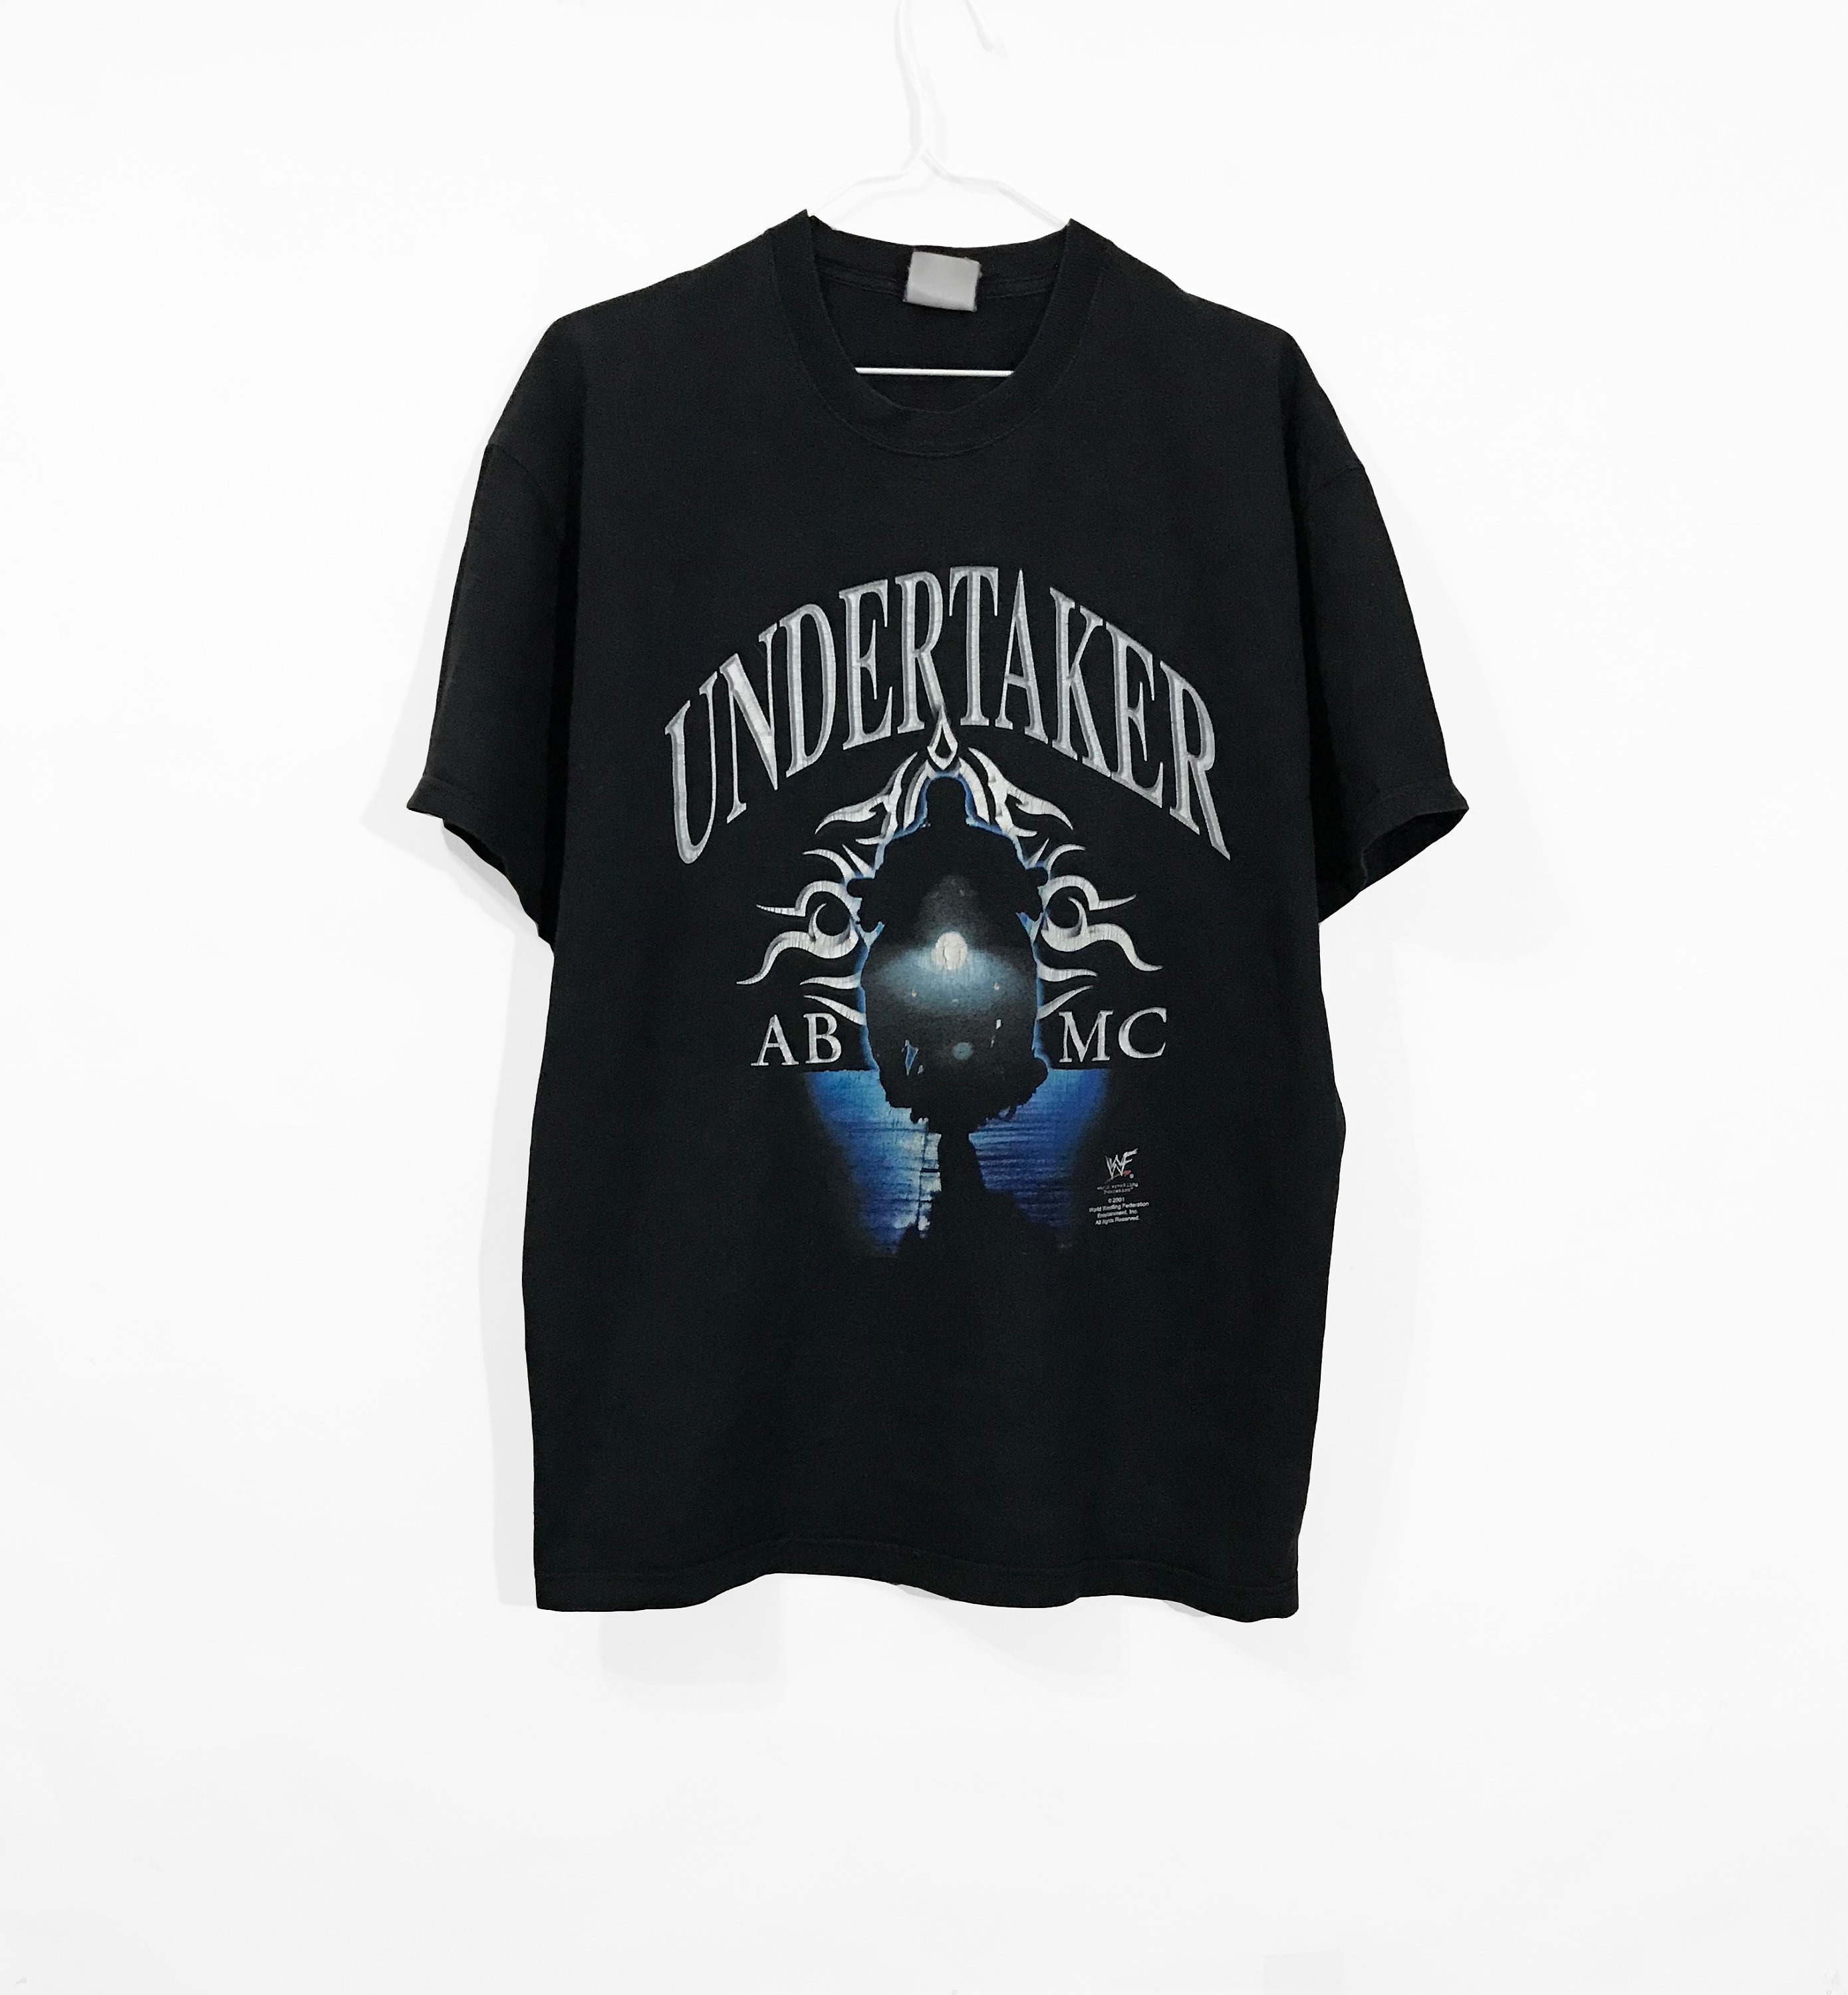 Kleding Unisex kinderkleding Tops & T-shirts T-shirts T-shirts met print Vintage Kids Triple H Wrestling WWE T Shirt Youth XL 